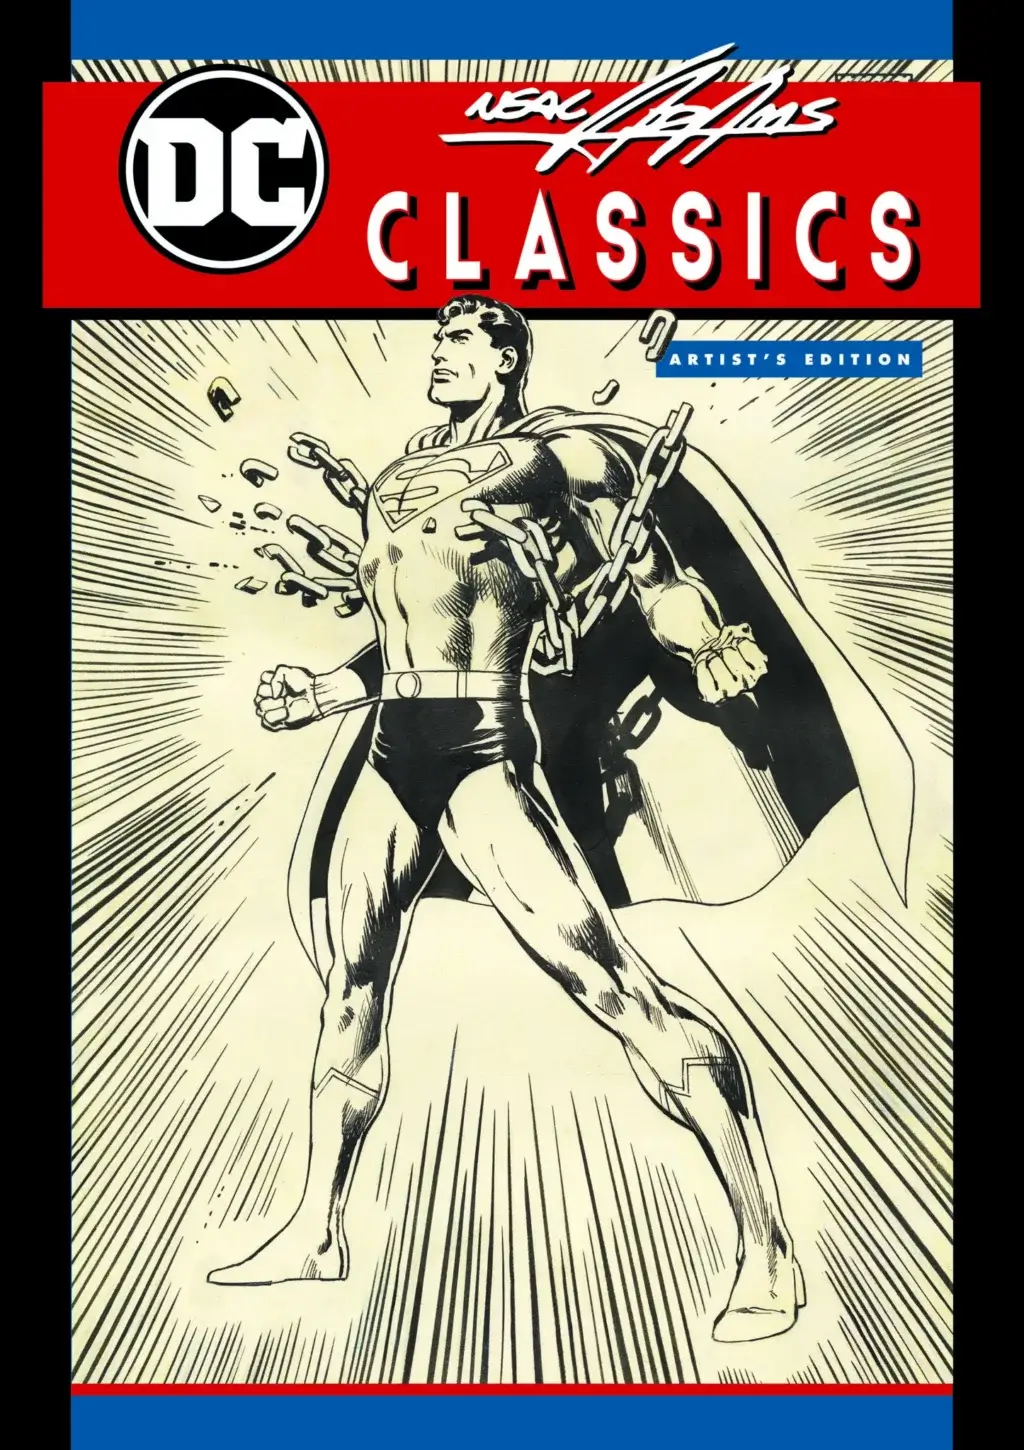 Neal Adams DC Classics Artist’s Edition Adams Variant 2